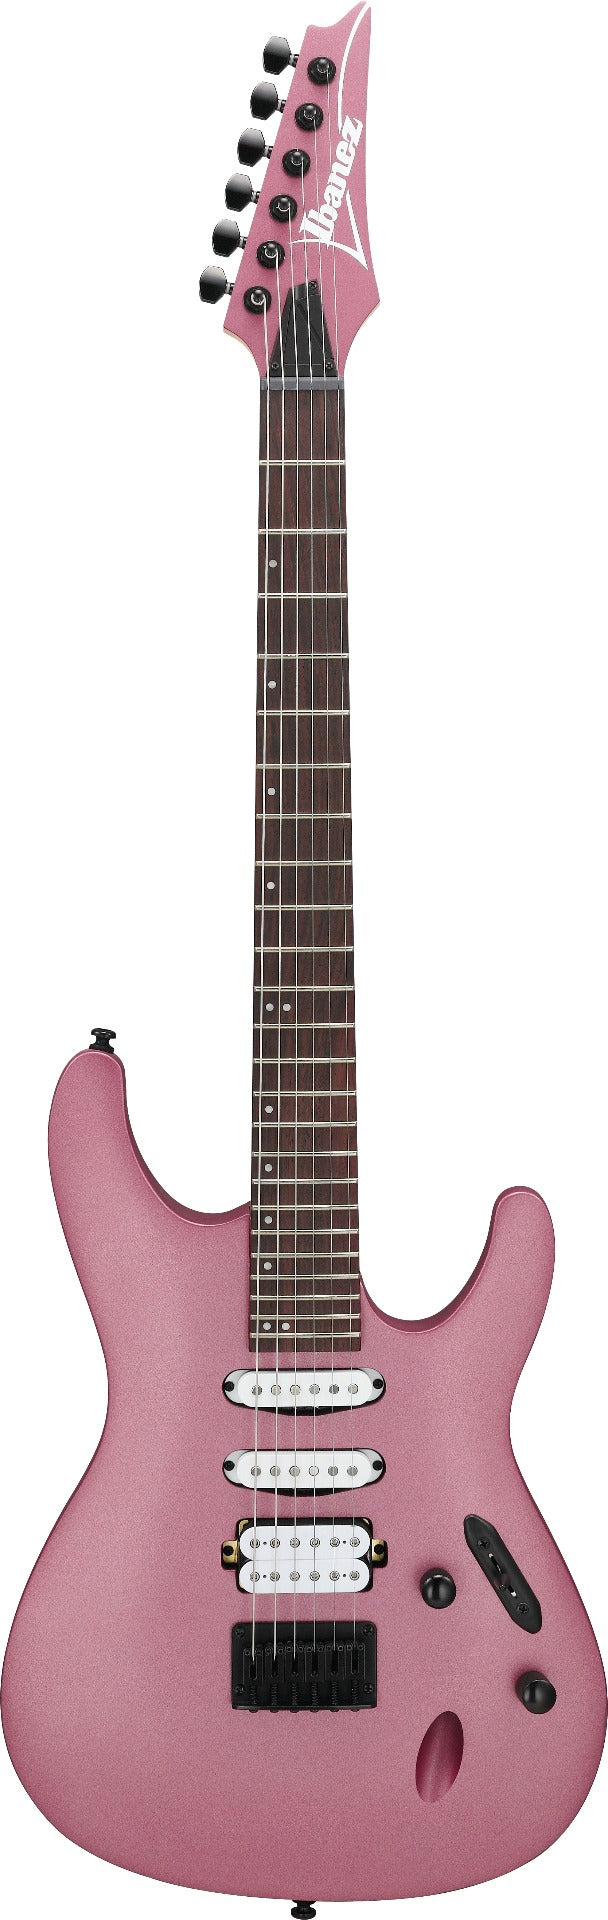 Ibanez S561PMM S Standard 6-String Electric Guitar - Pink Gold Metallic Matte